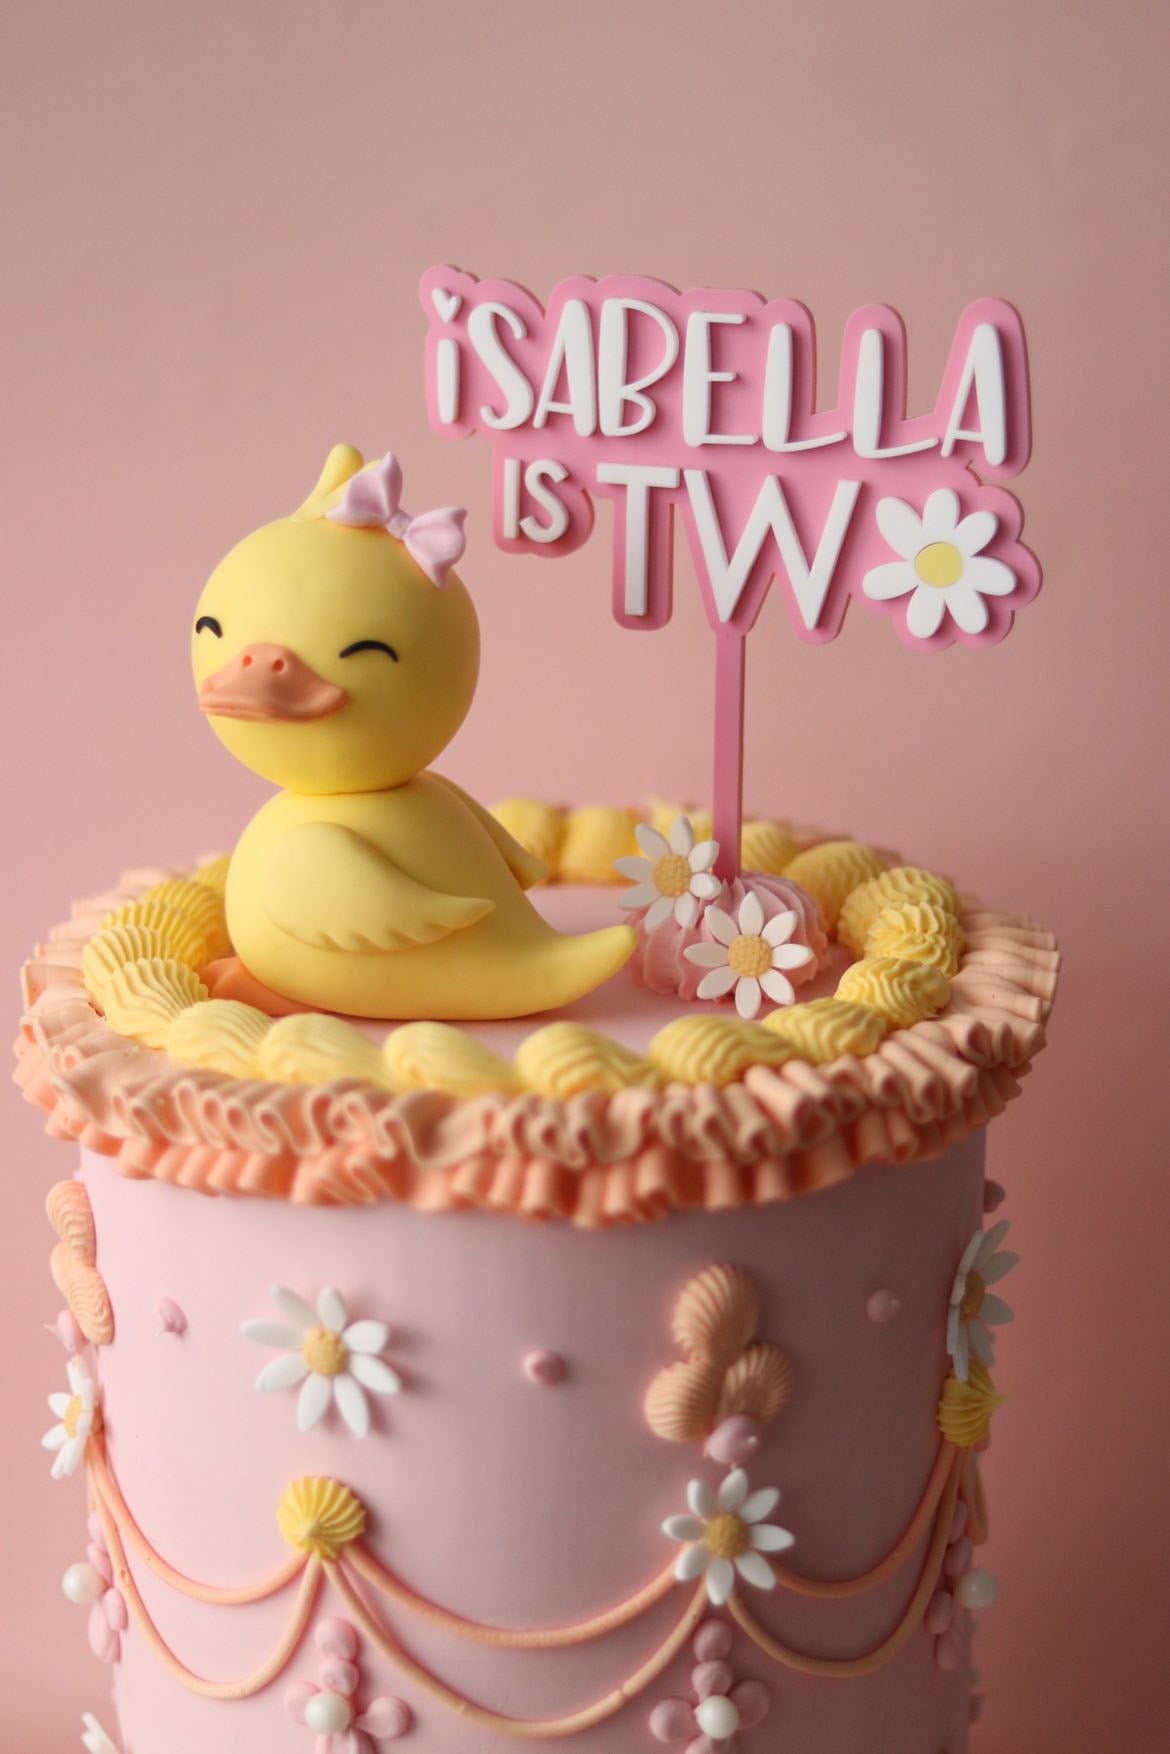 The Sensational Cakes: 1ST YEAR BIRTHDAY CAKE / RUBBER DUCKY CAKE SINGAPORE